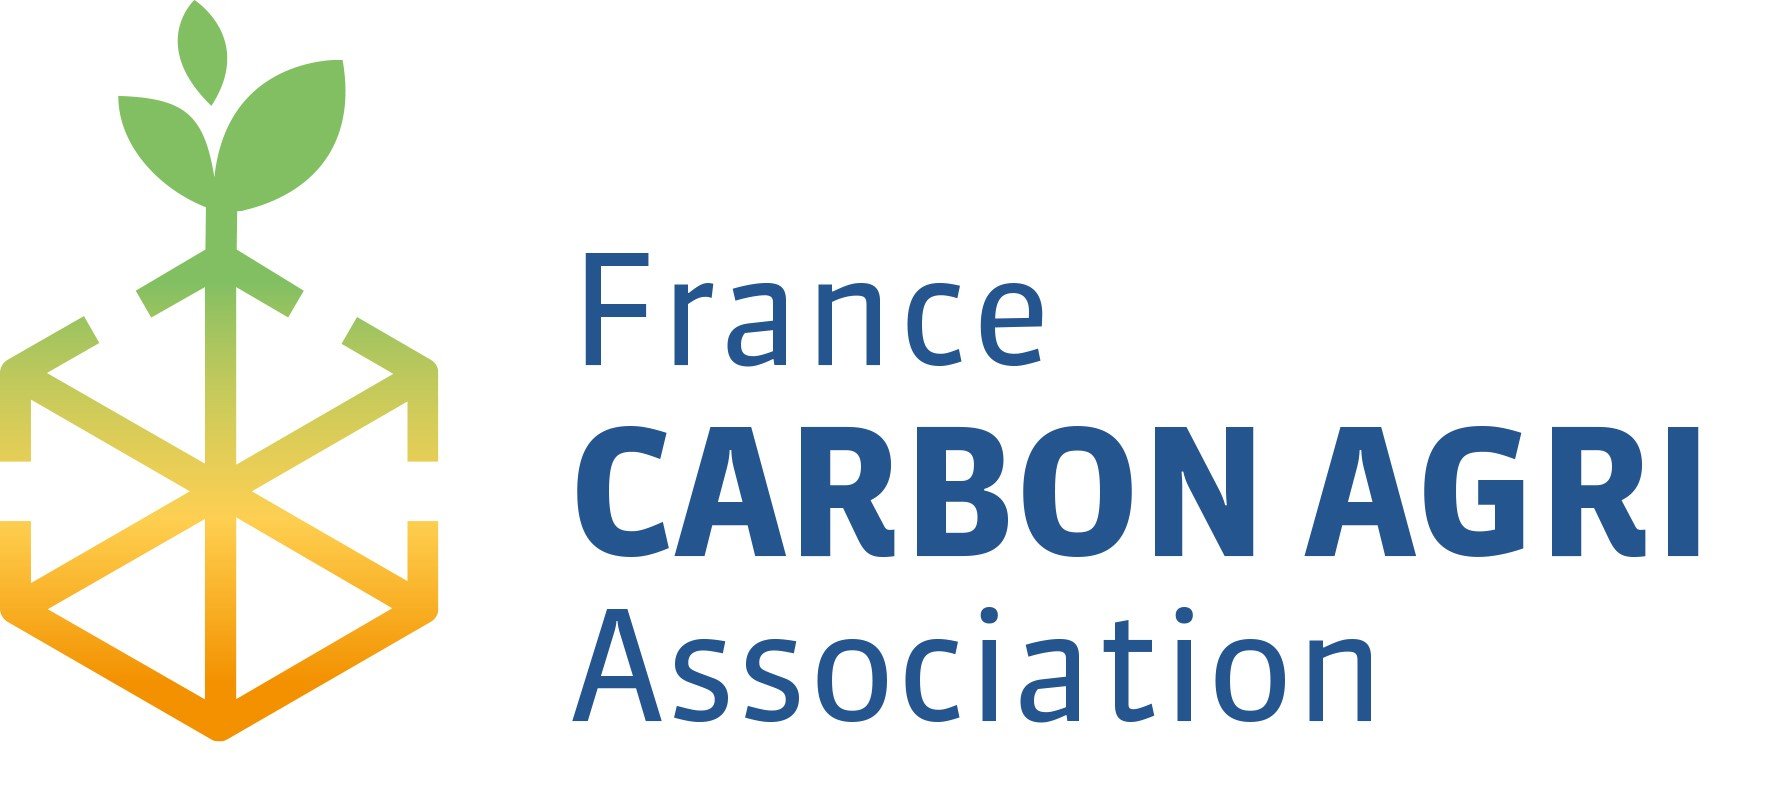 France CARBON AGRI Association